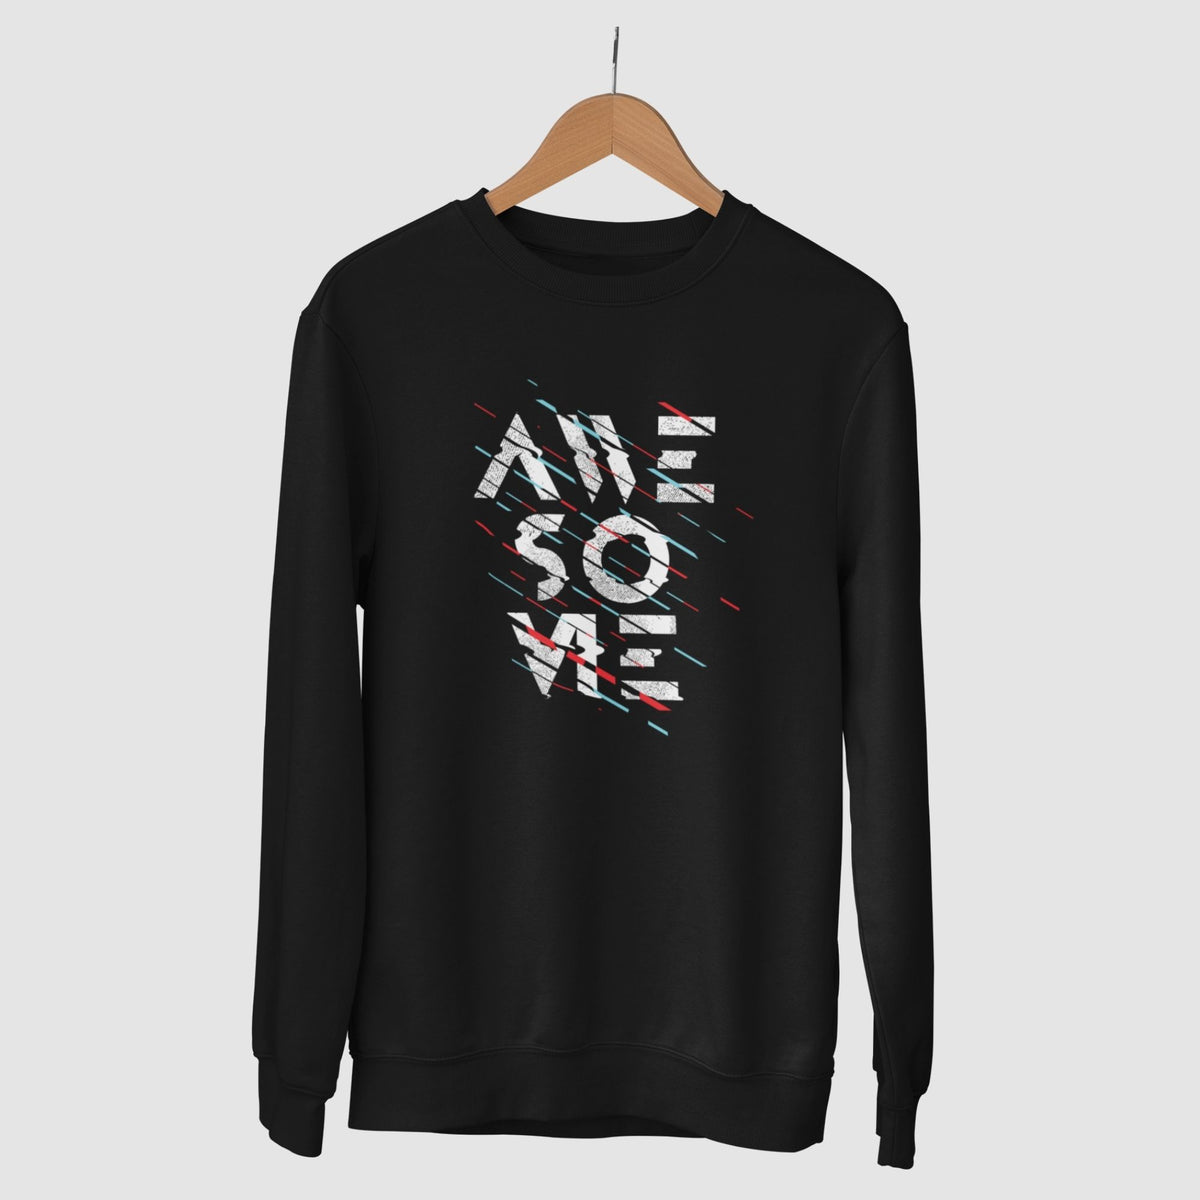 awesome-cotton-printed-unisex-black-sweatshirt-gogirgit-com